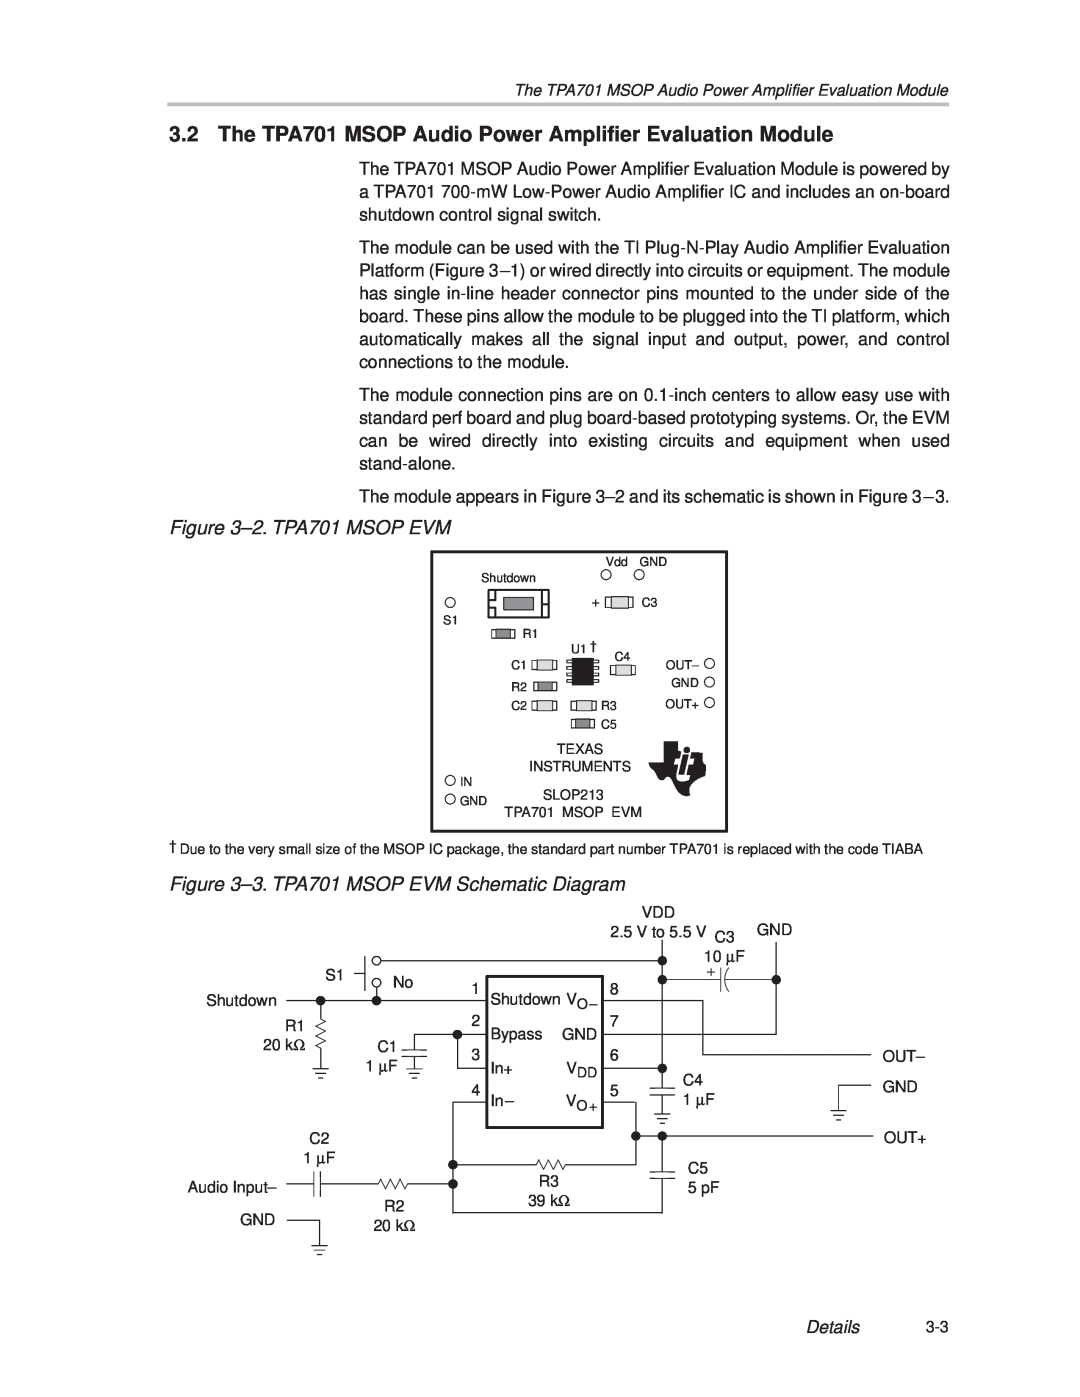 Texas Instruments manual ±2. TPA701 MSOP EVM, ±3. TPA701 MSOP EVM Schematic Diagram, Details 